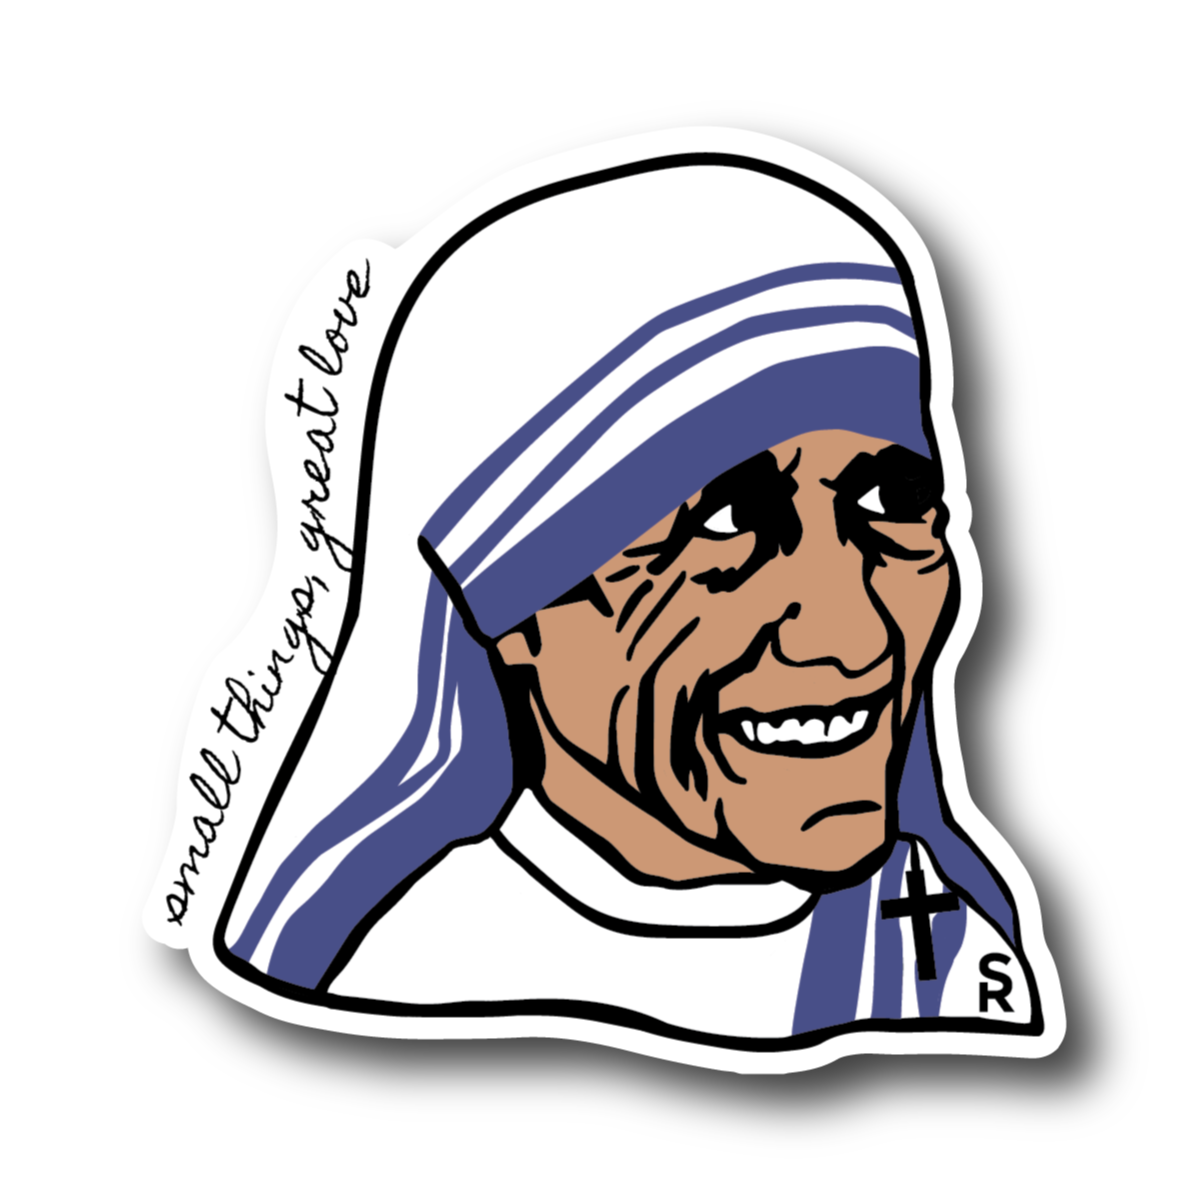 St. Teresa of Calcutta Sticker